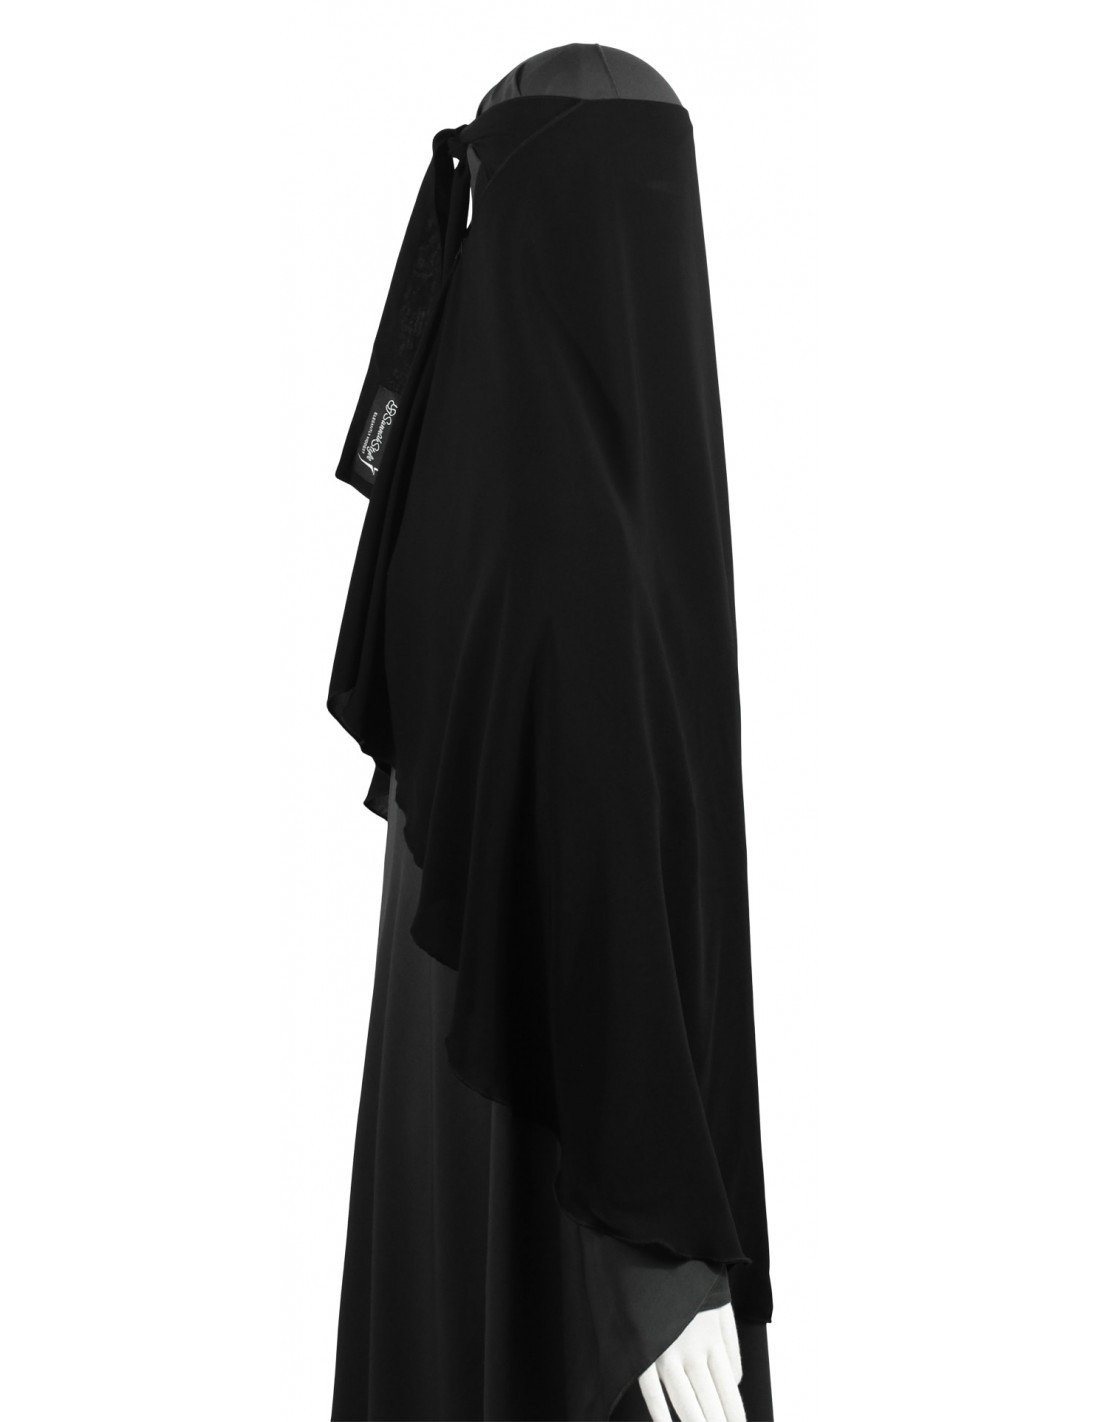 Two Layer Snapp Niqab